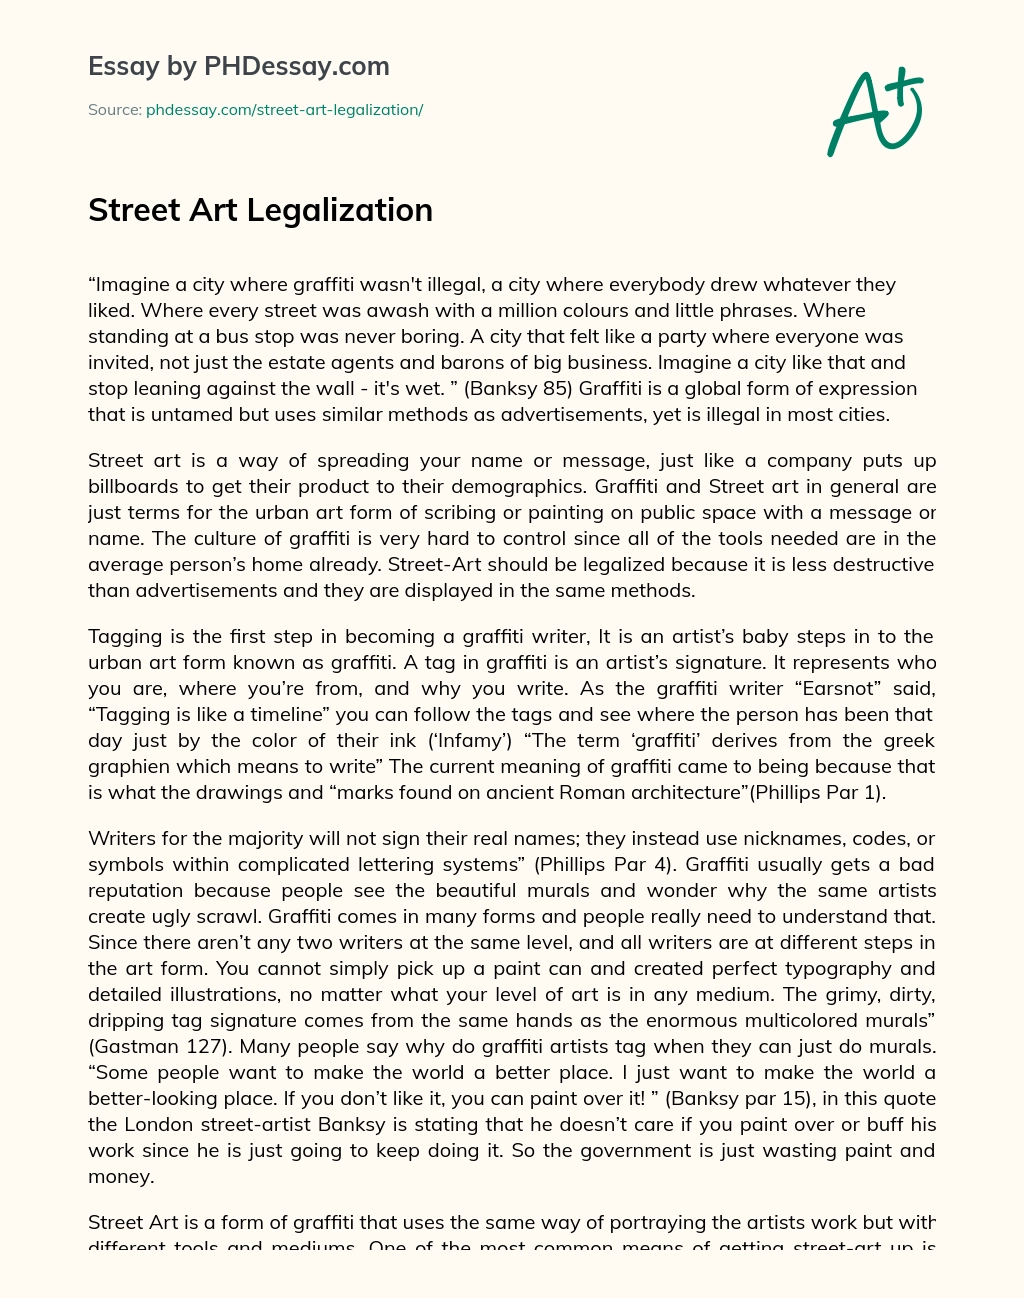 Street Art Legalization essay